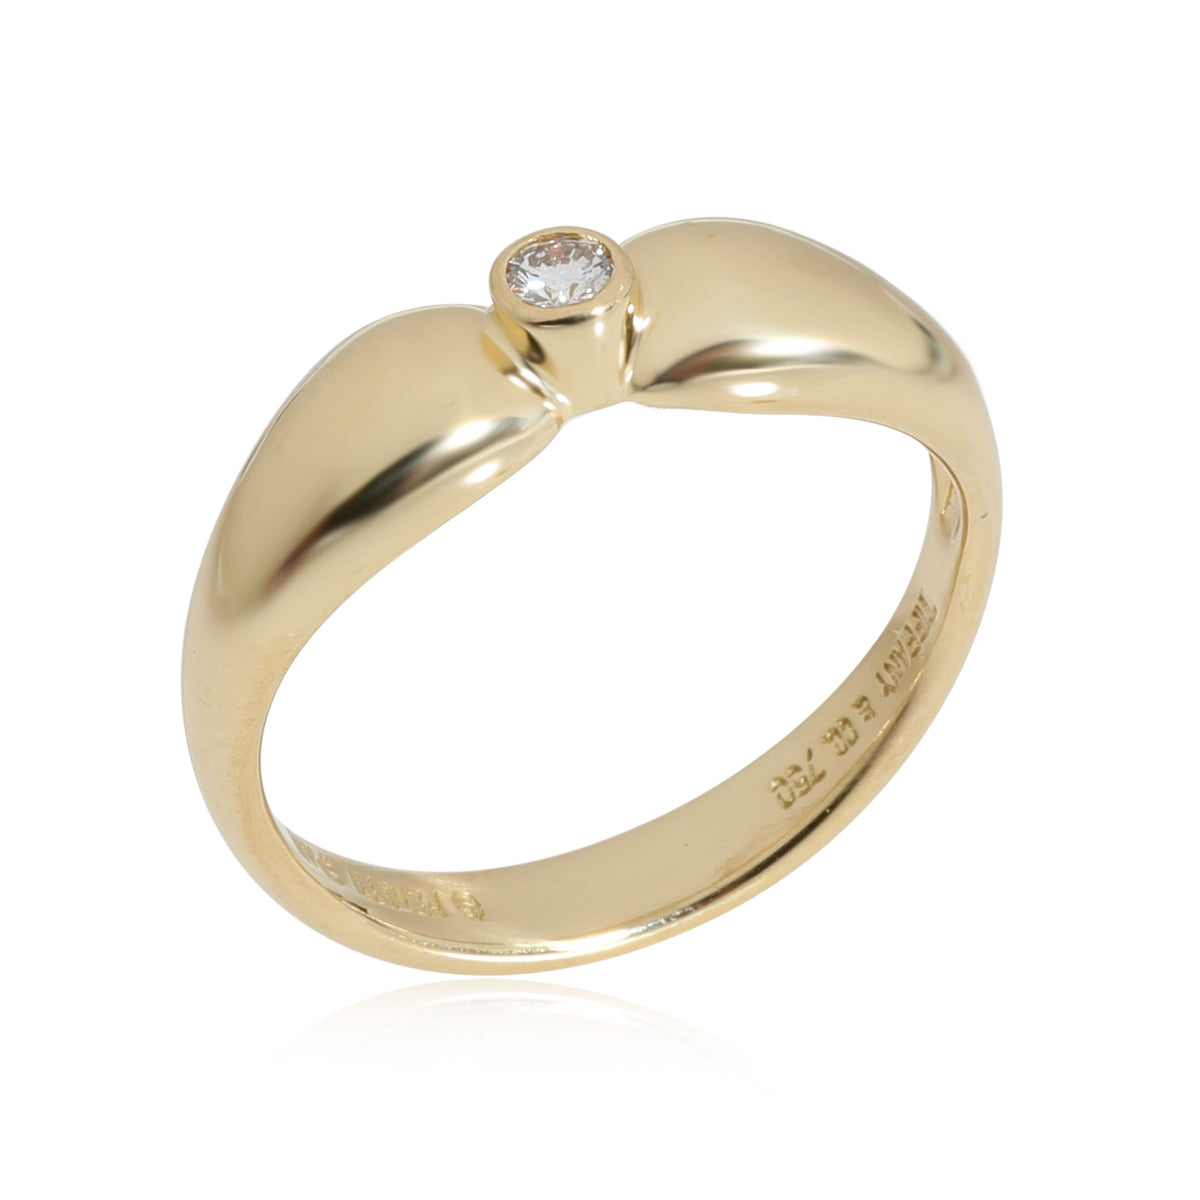 Tiffany & Co. Elsa Peretti Bezel Diamond Ring in 18k Yellow Gold 0.04 CTW